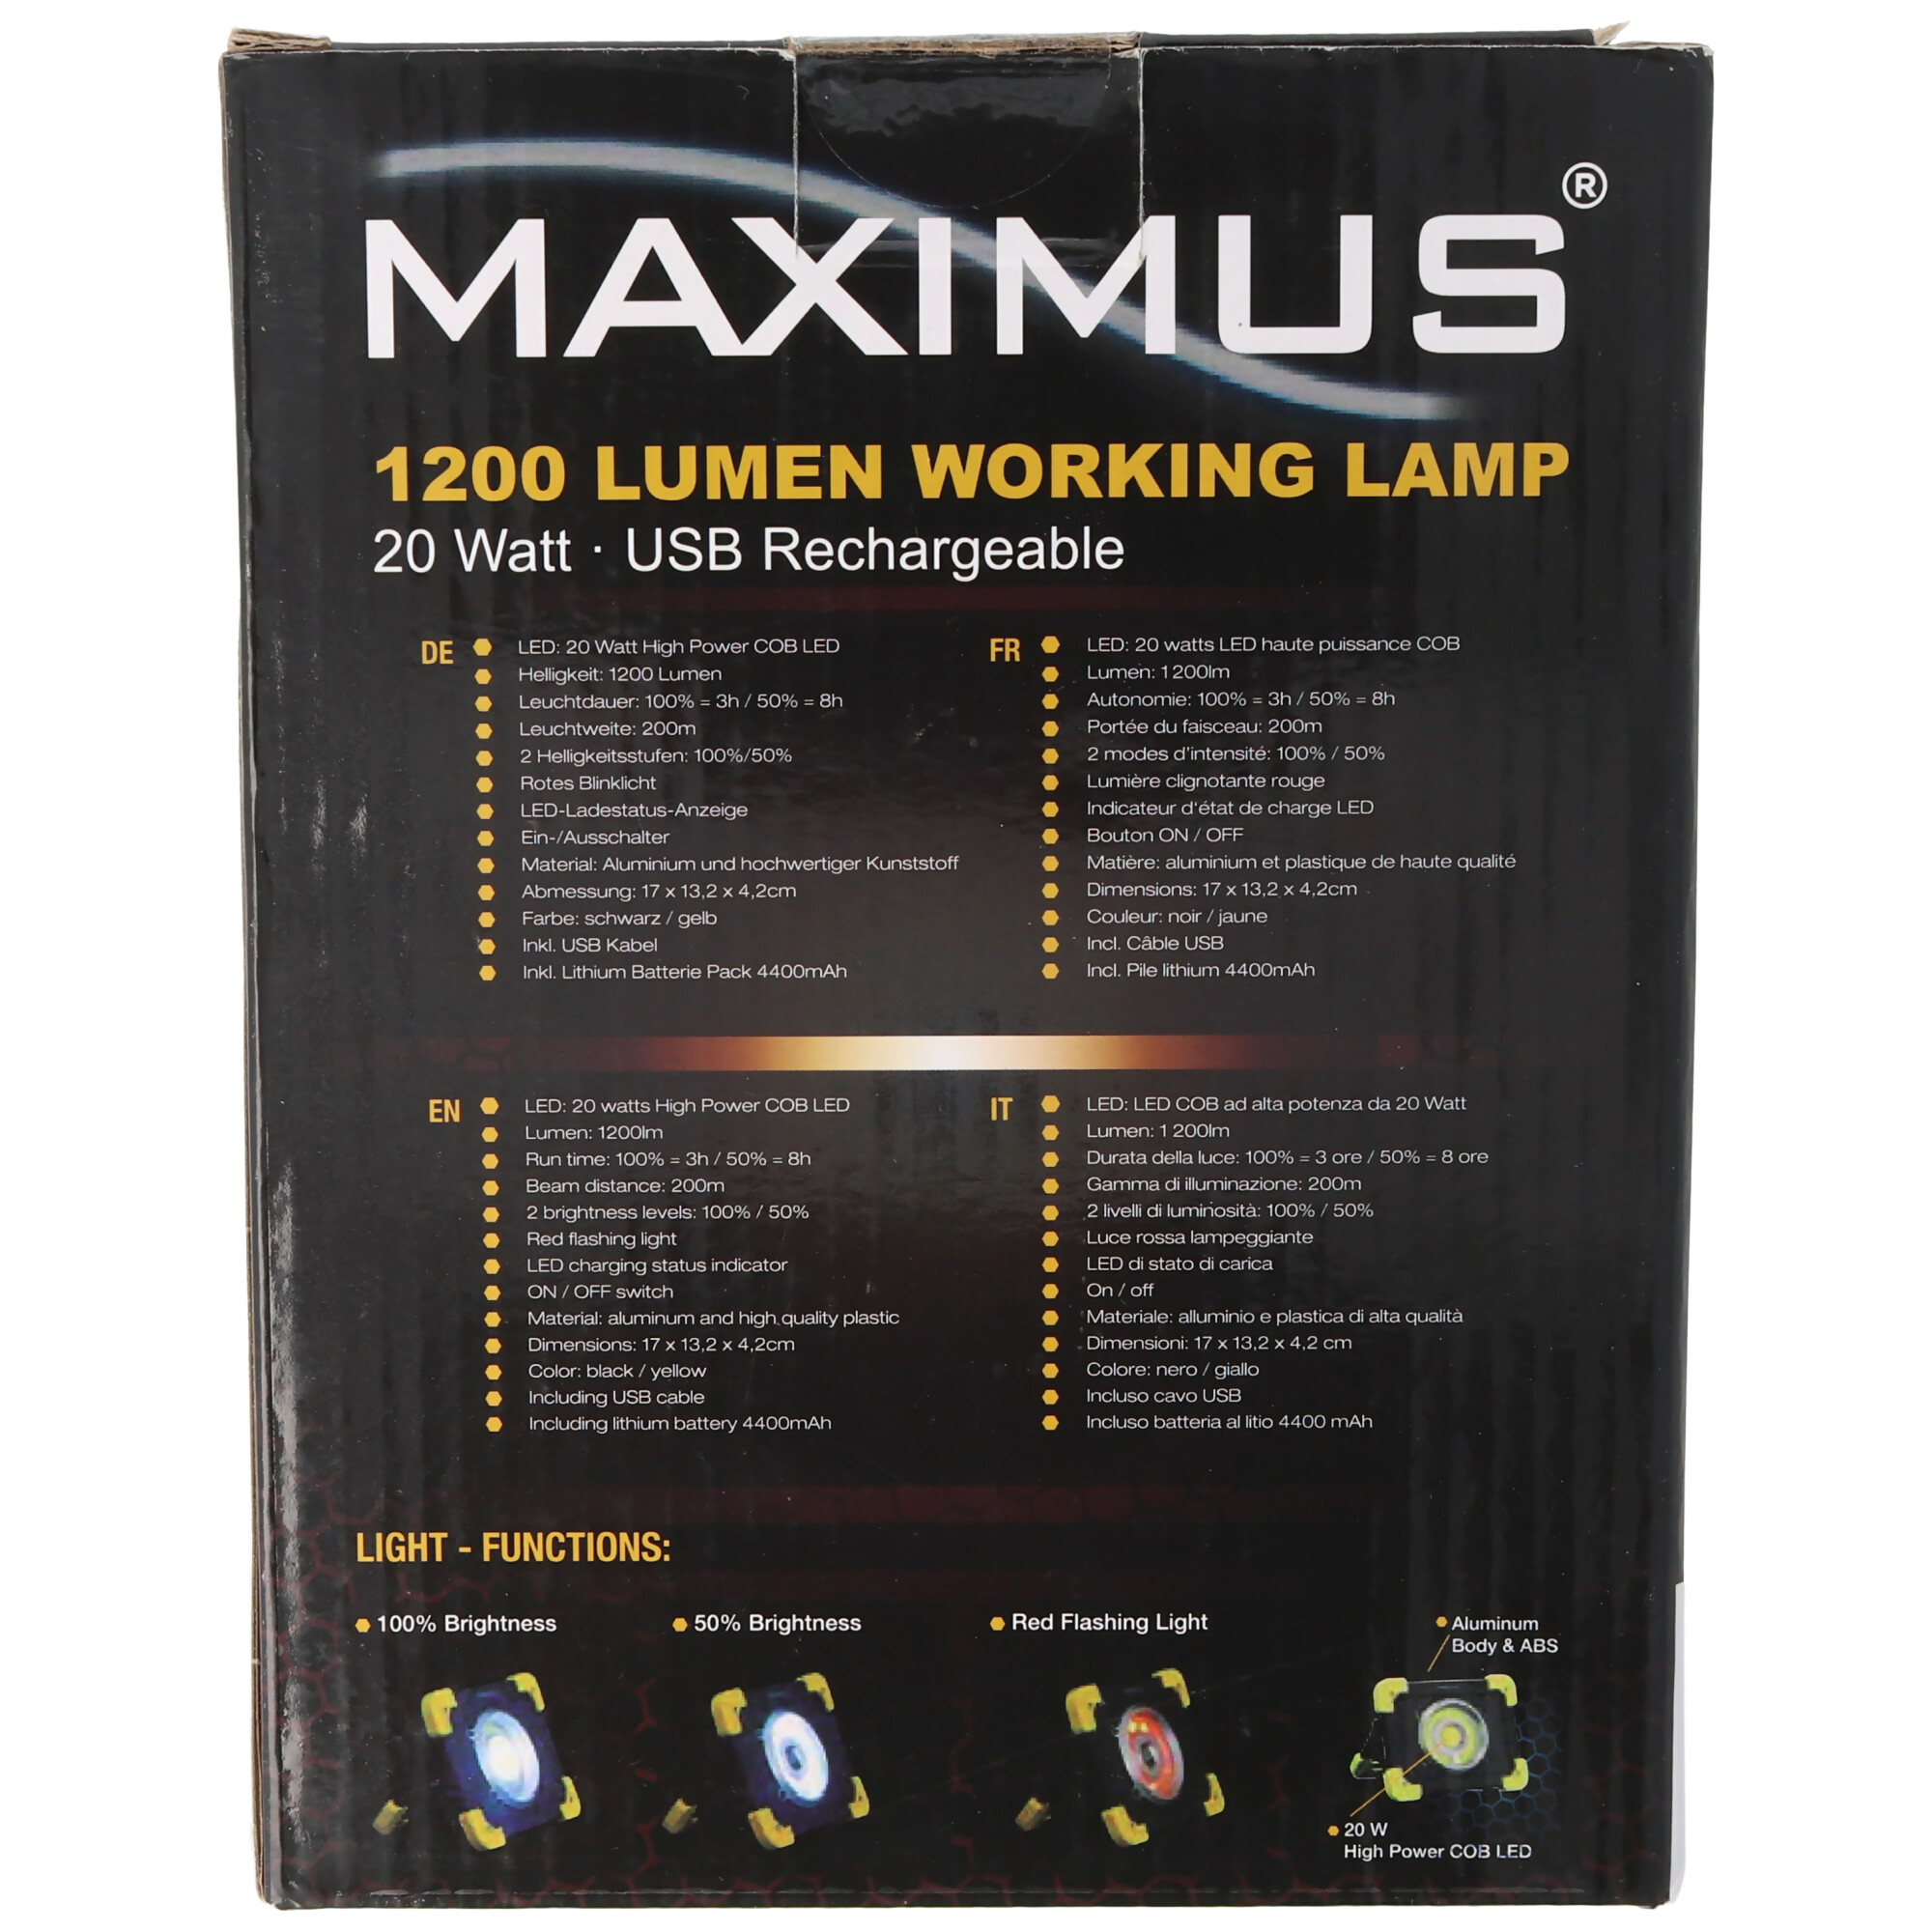 LED Baustrahler 20W max. 350lm im Kunststoffgehäuse schwarz, gelb inklusive 4400mAh Li-Ion Akku und USB-Ladekabel